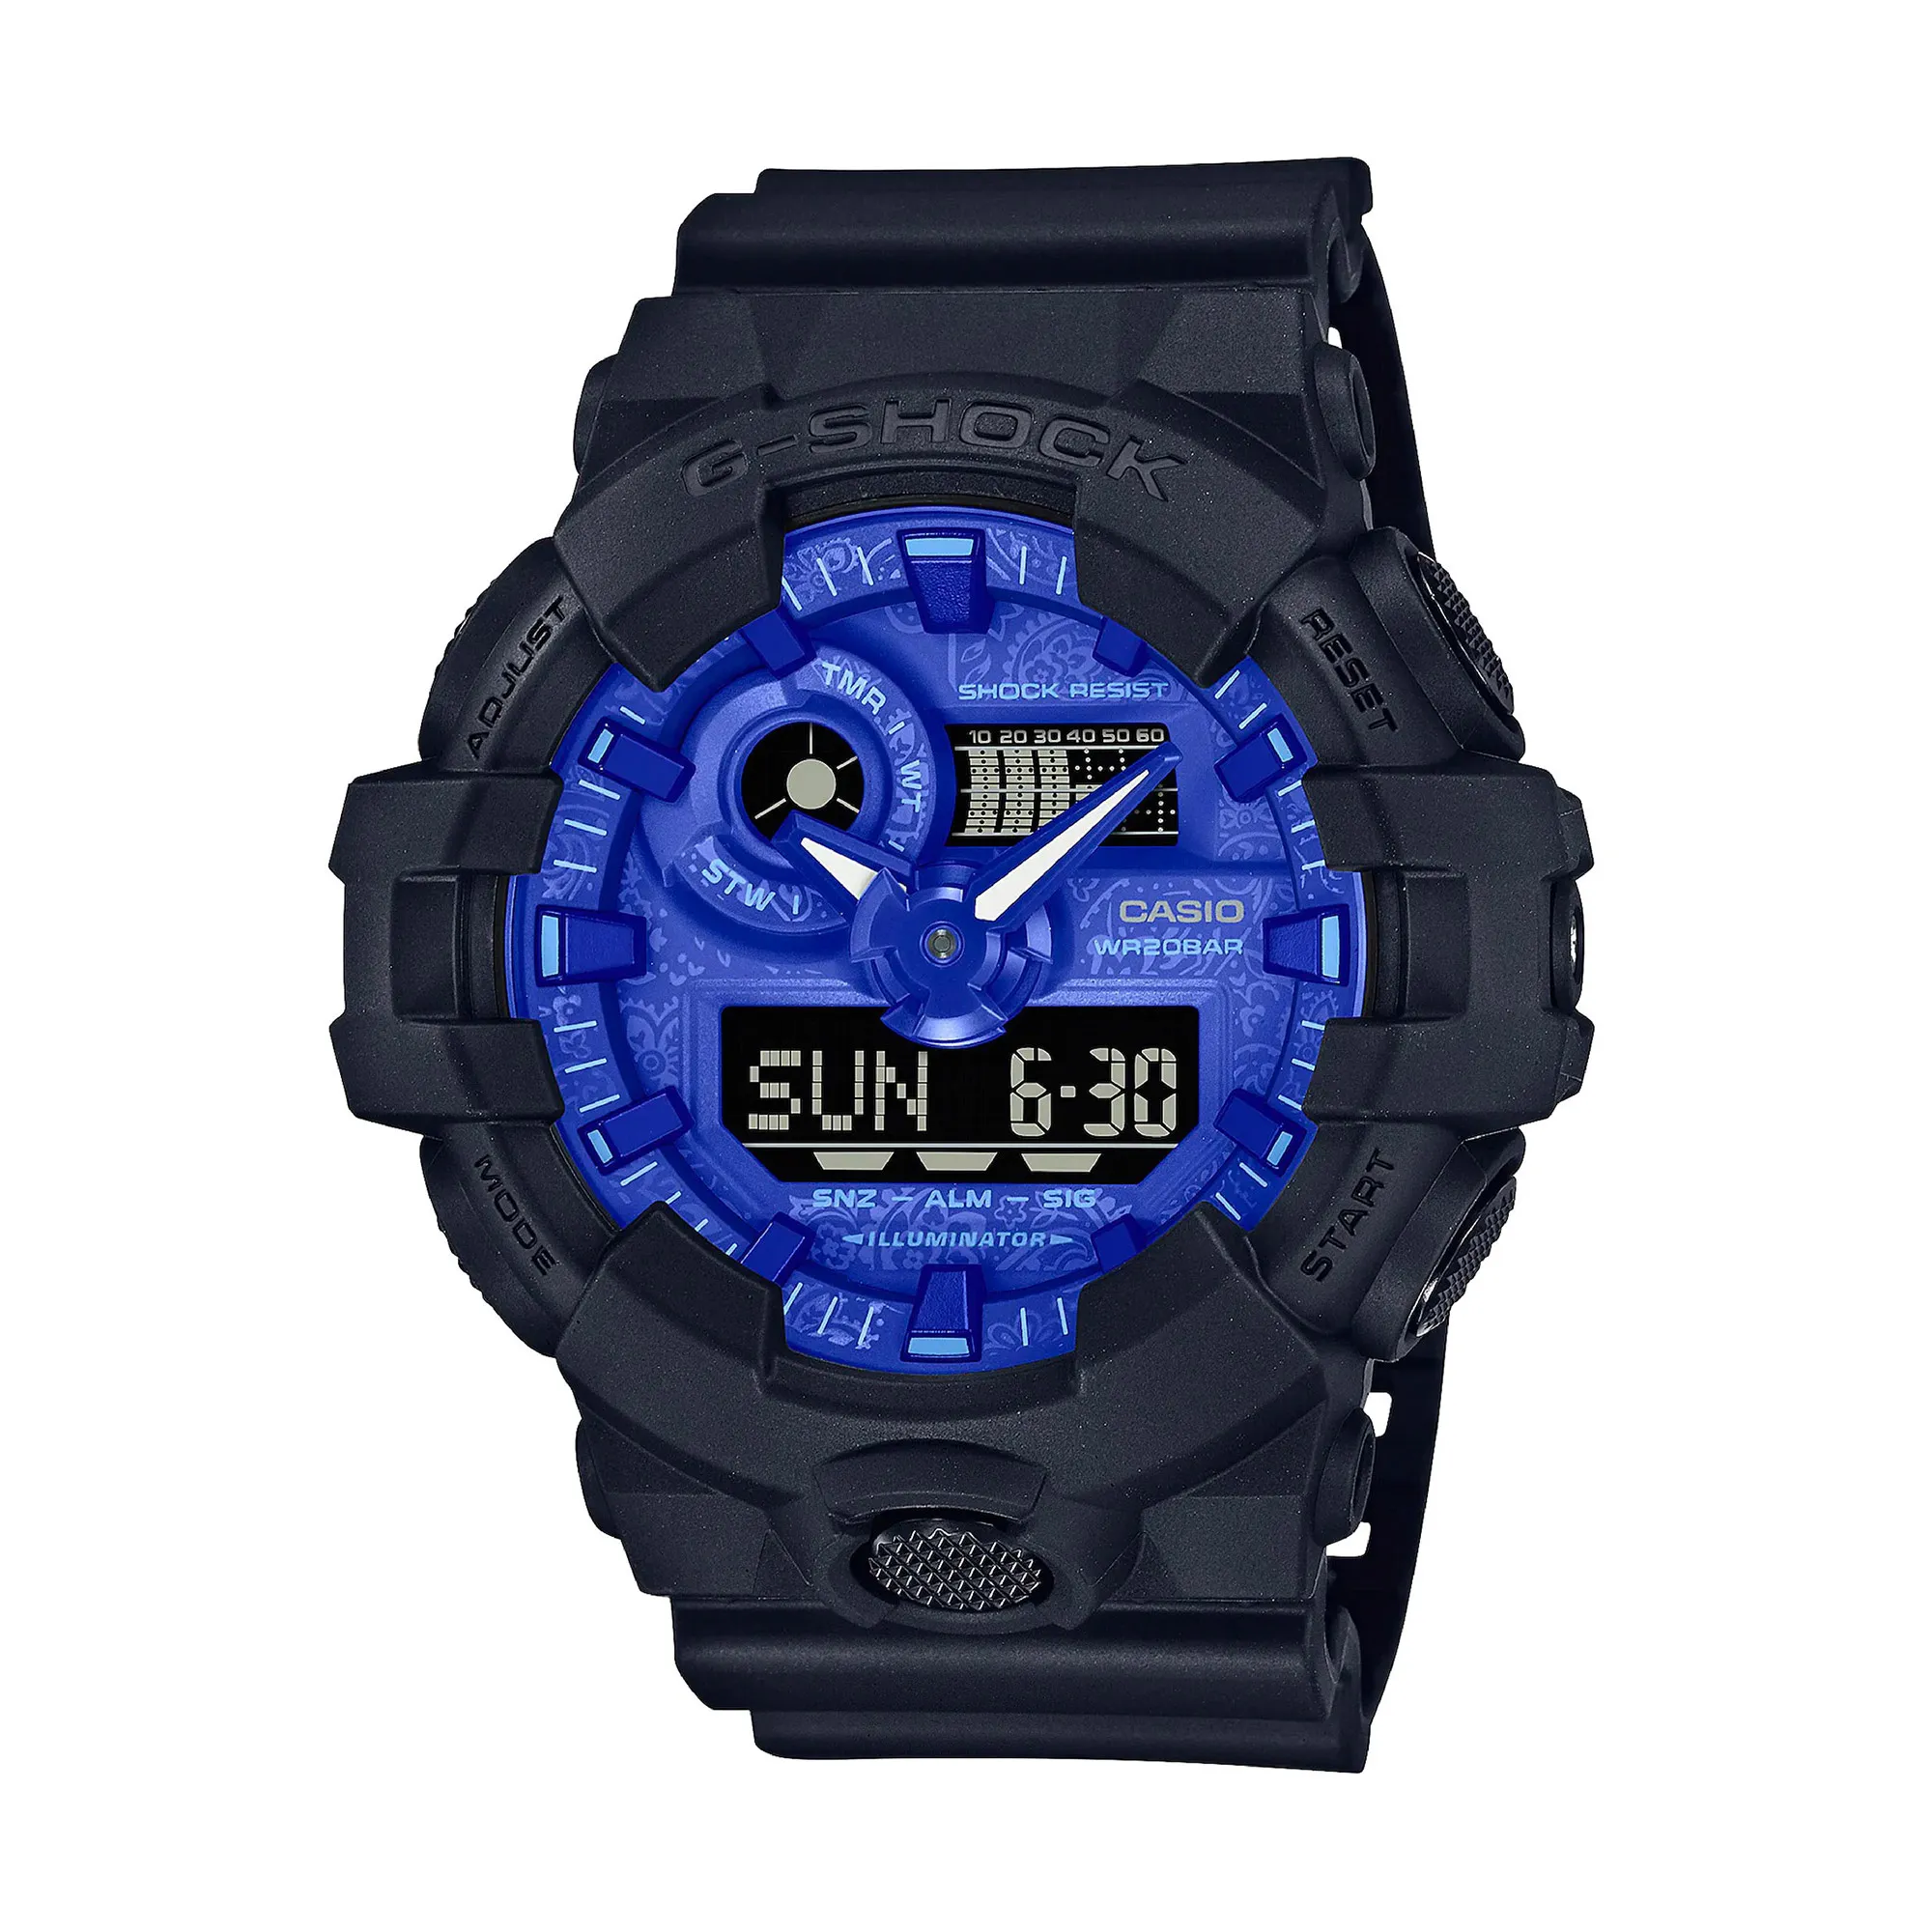 Watch CASIO G-Shock ga-700bp-1aer